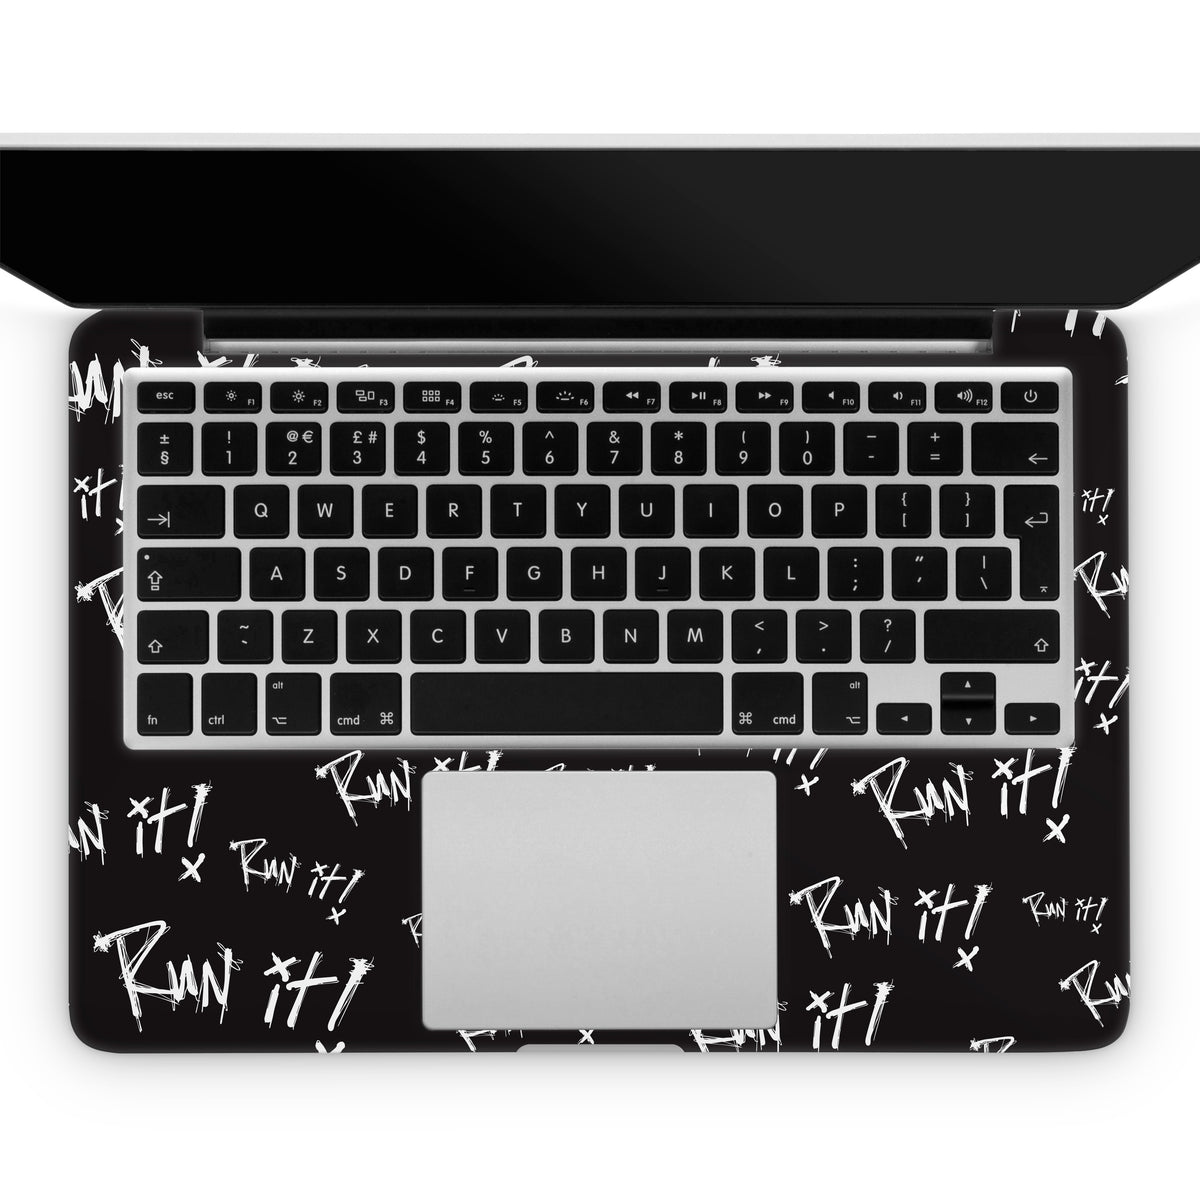 Run It - Black (MacBook Skin)